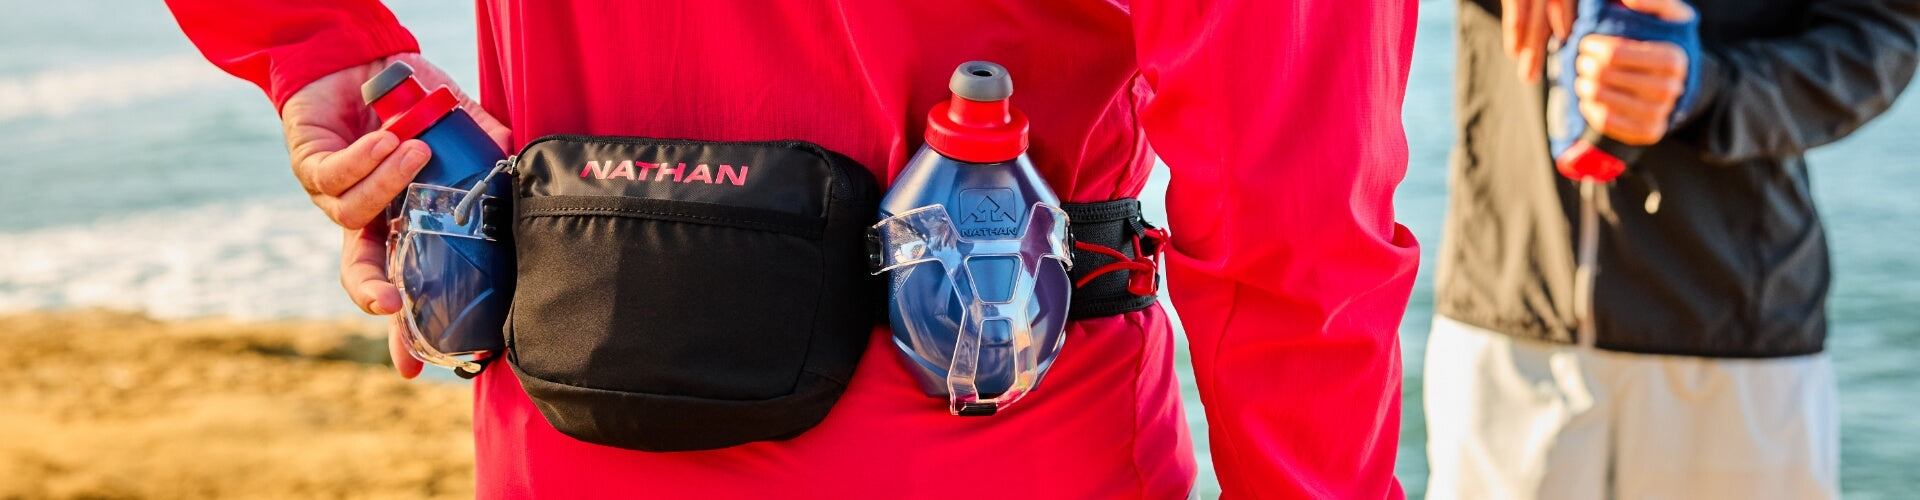 Runner With Water Bottle in Hydration Belt